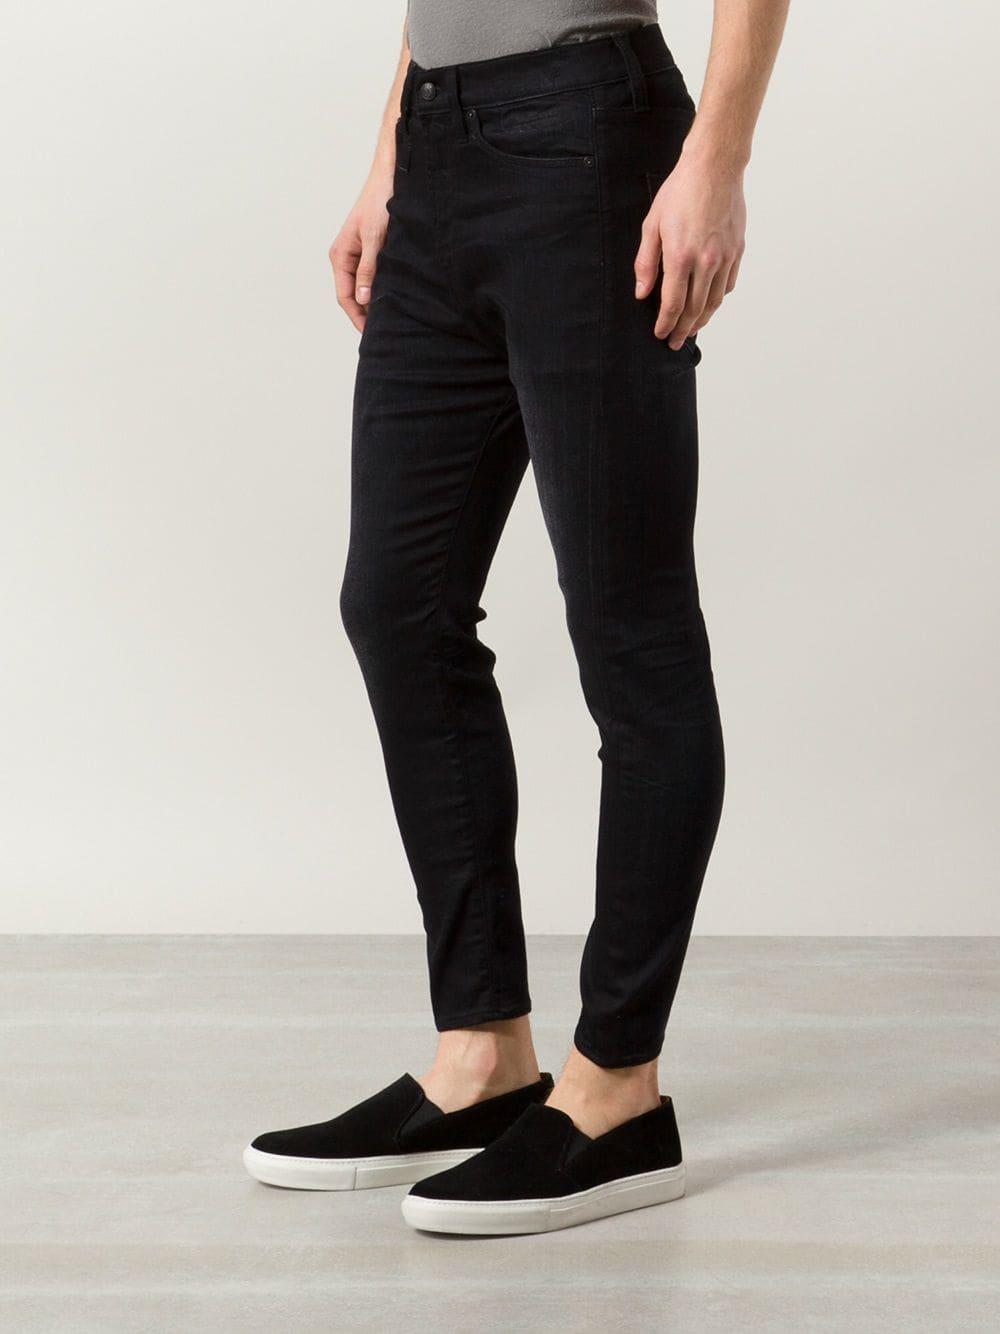 R13 Drop-crotch Skinny Jeans in Black for Men - Lyst